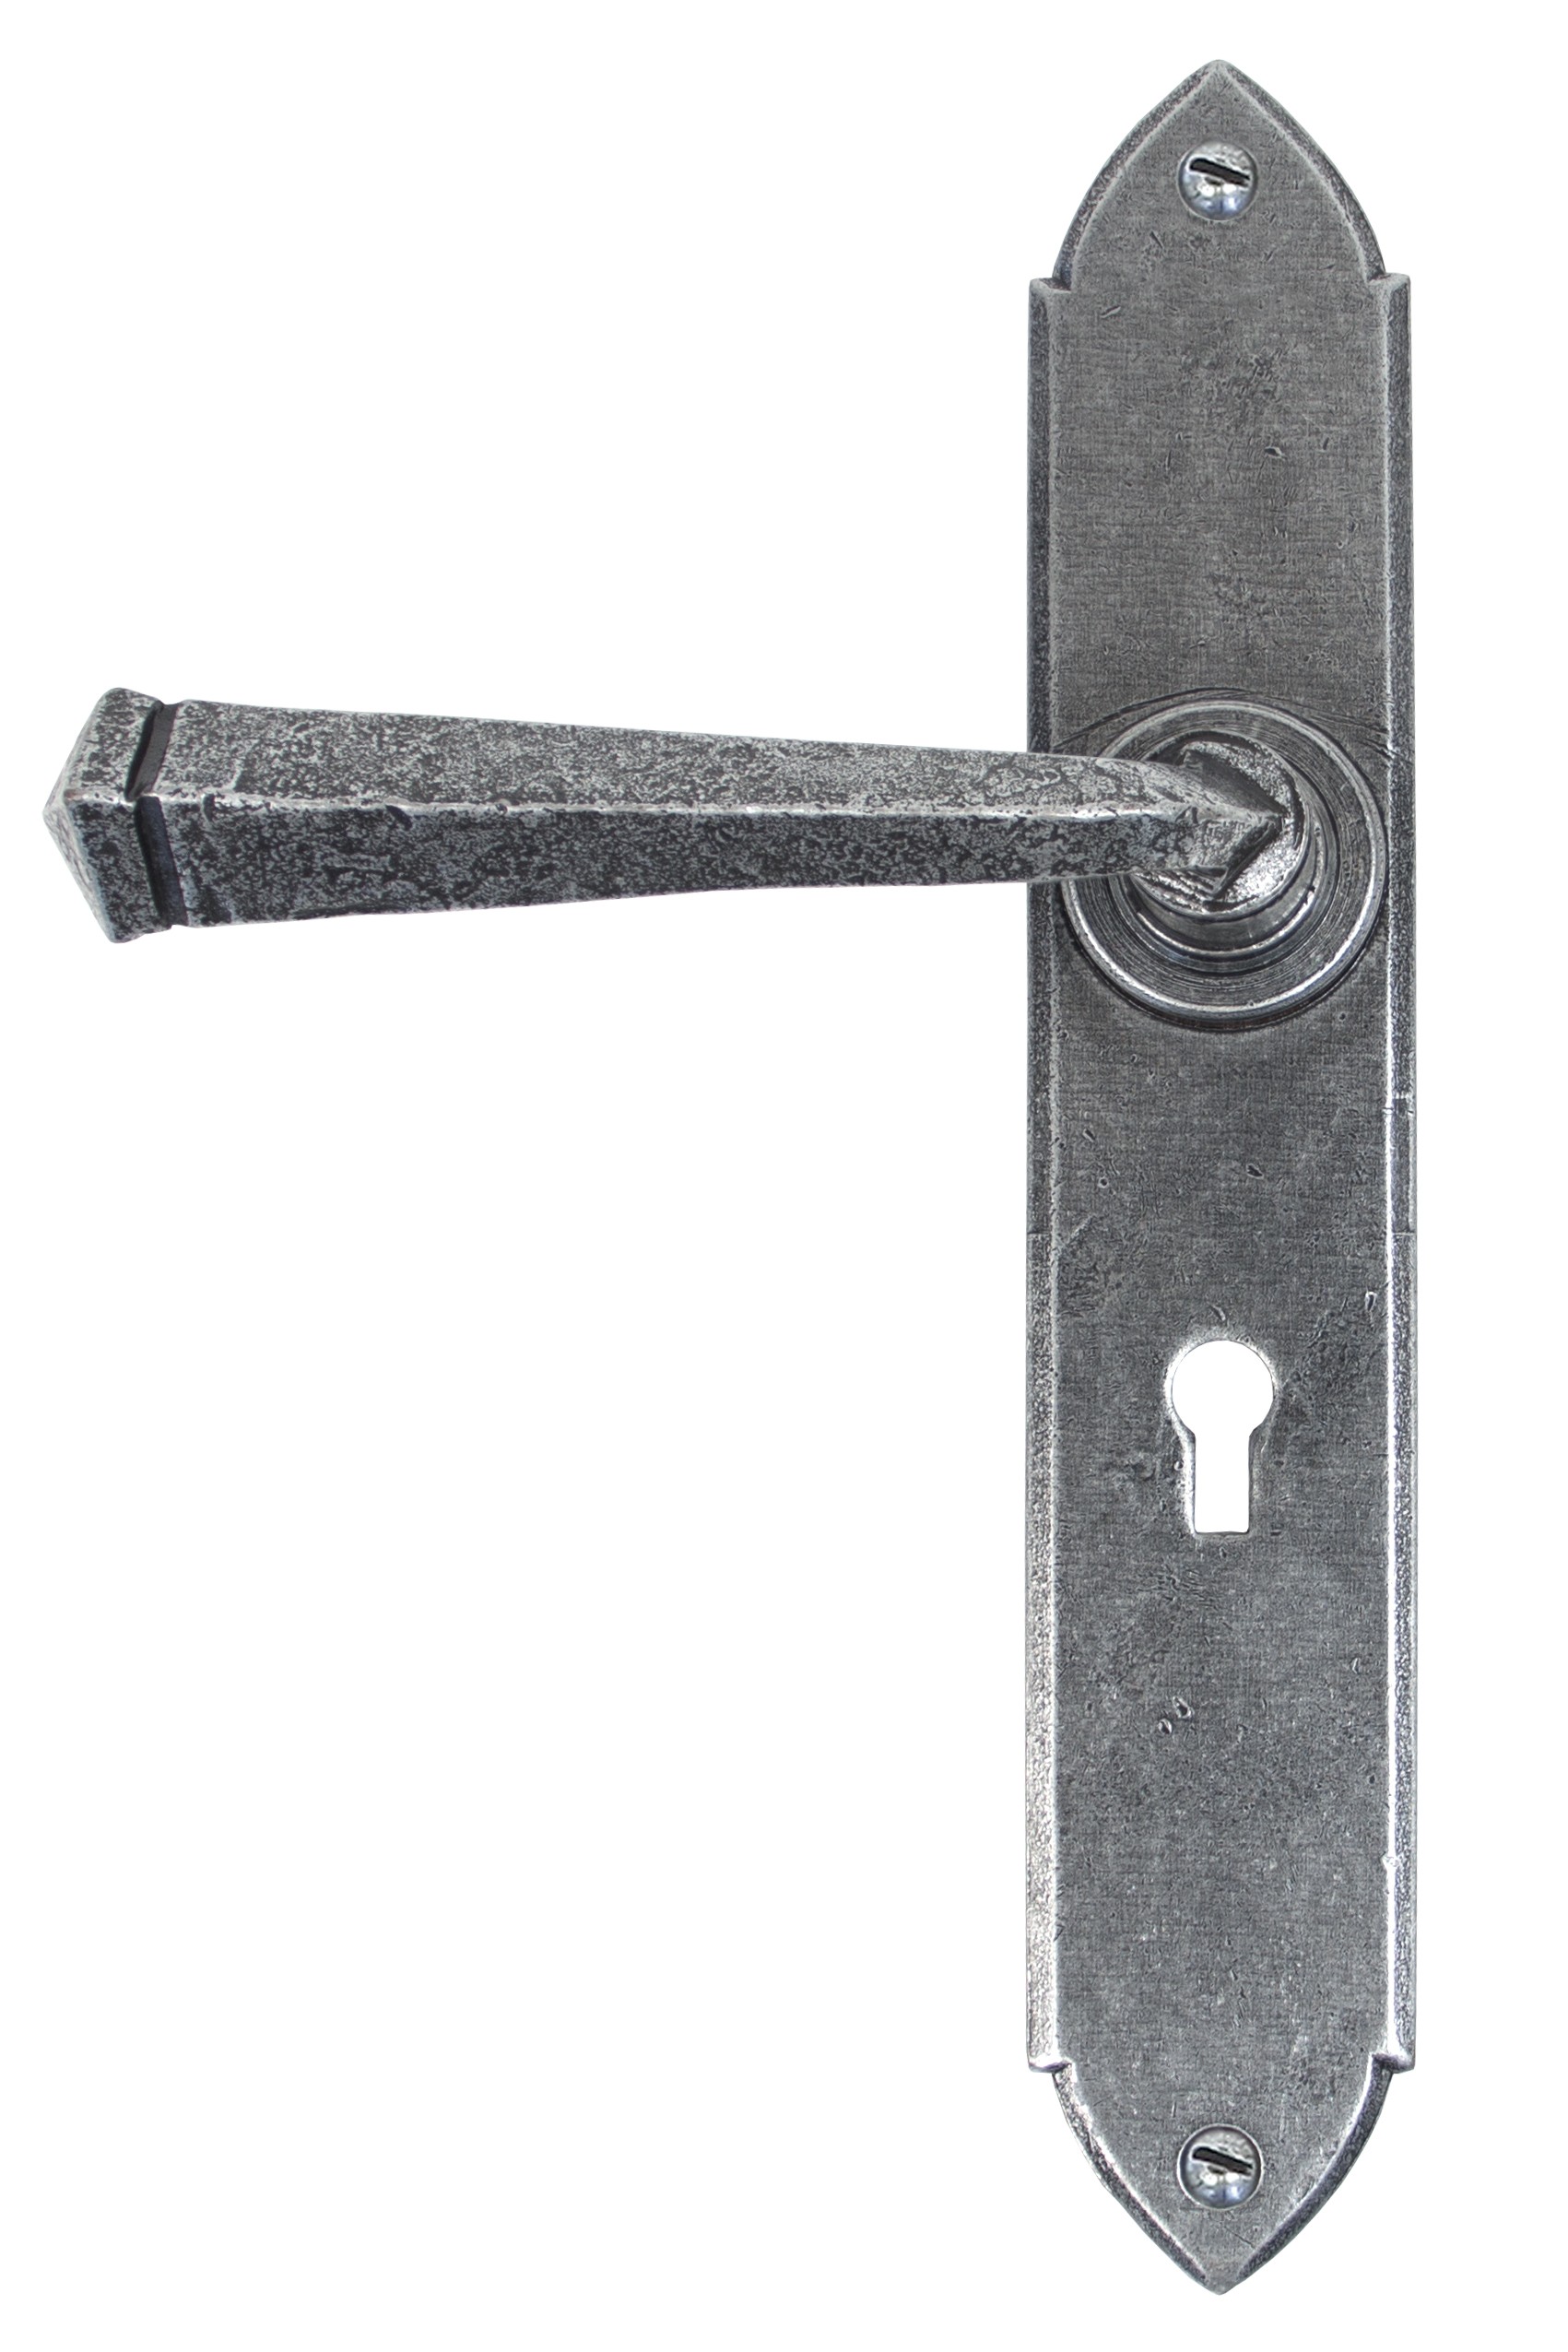 ANVIL - Pewter Gothic Lever Lock Set  Anvil33600